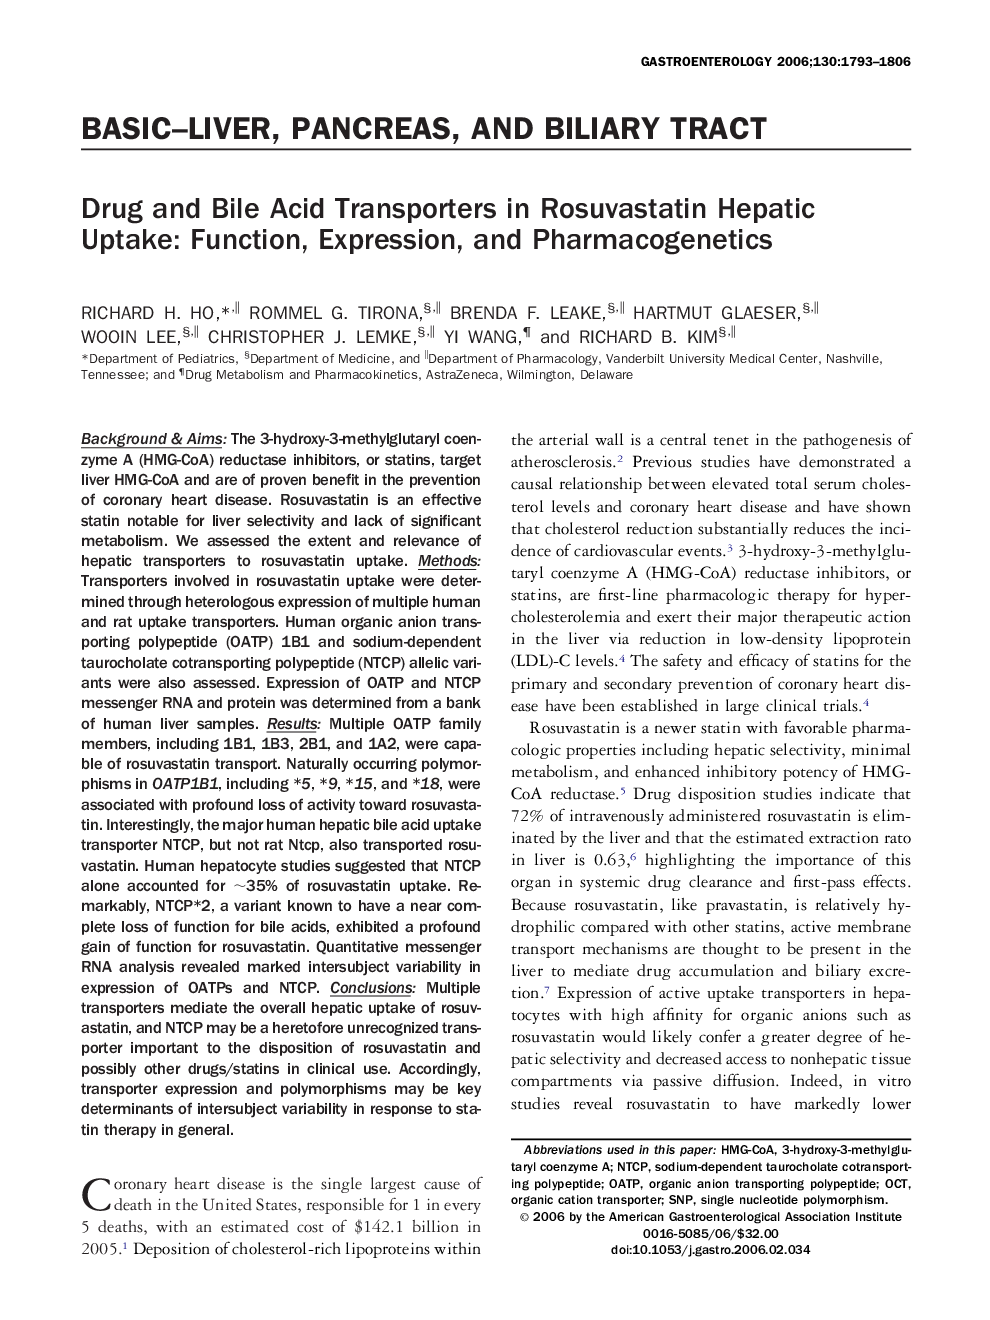 Drug and Bile Acid Transporters in Rosuvastatin Hepatic Uptake: Function, Expression, and Pharmacogenetics 